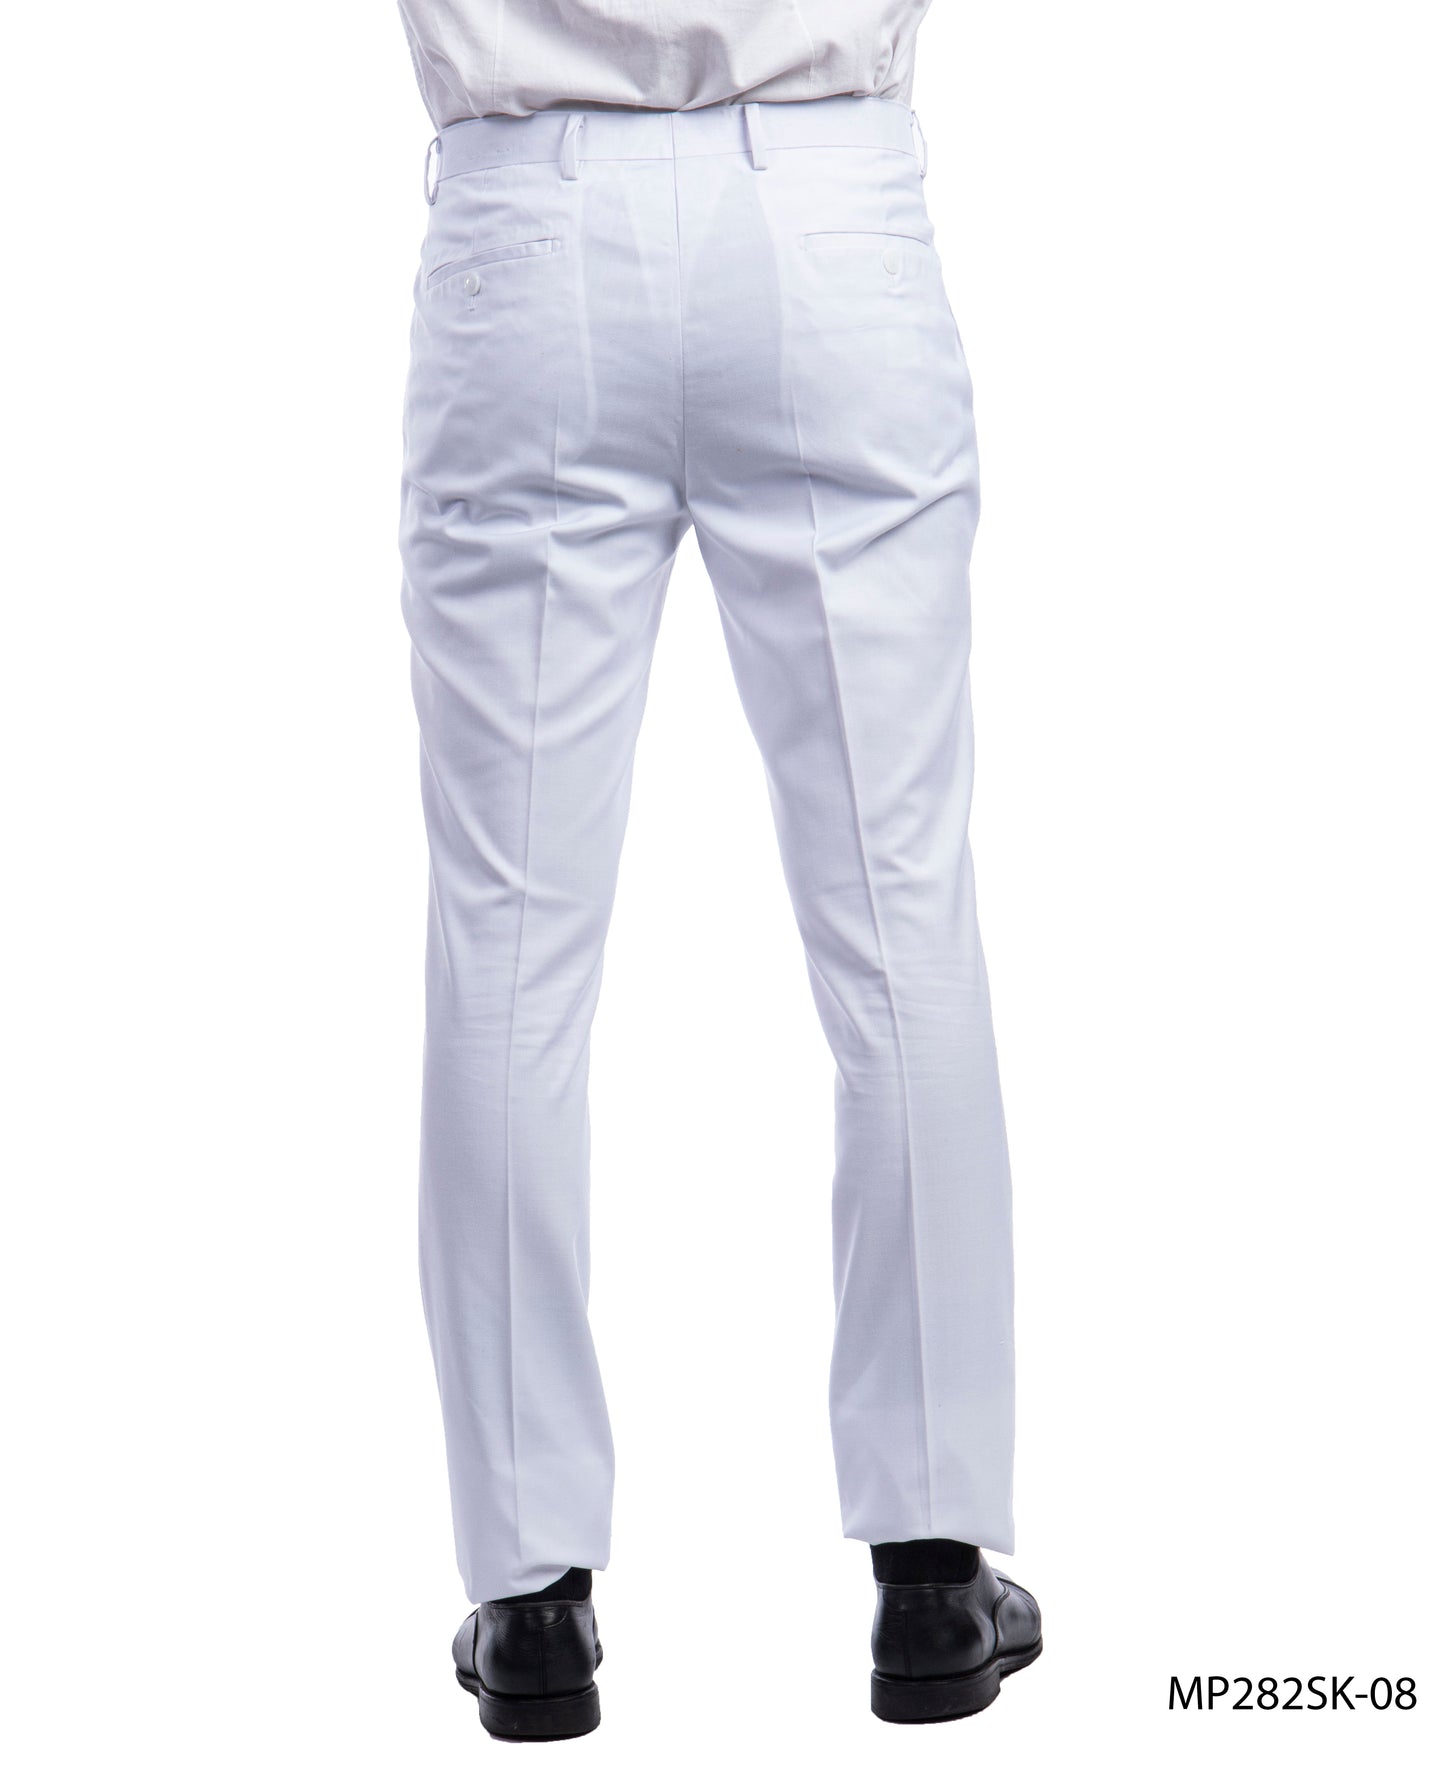 Sean Alexander Mens White Performance Stretch Dress Pants MP282SK-08